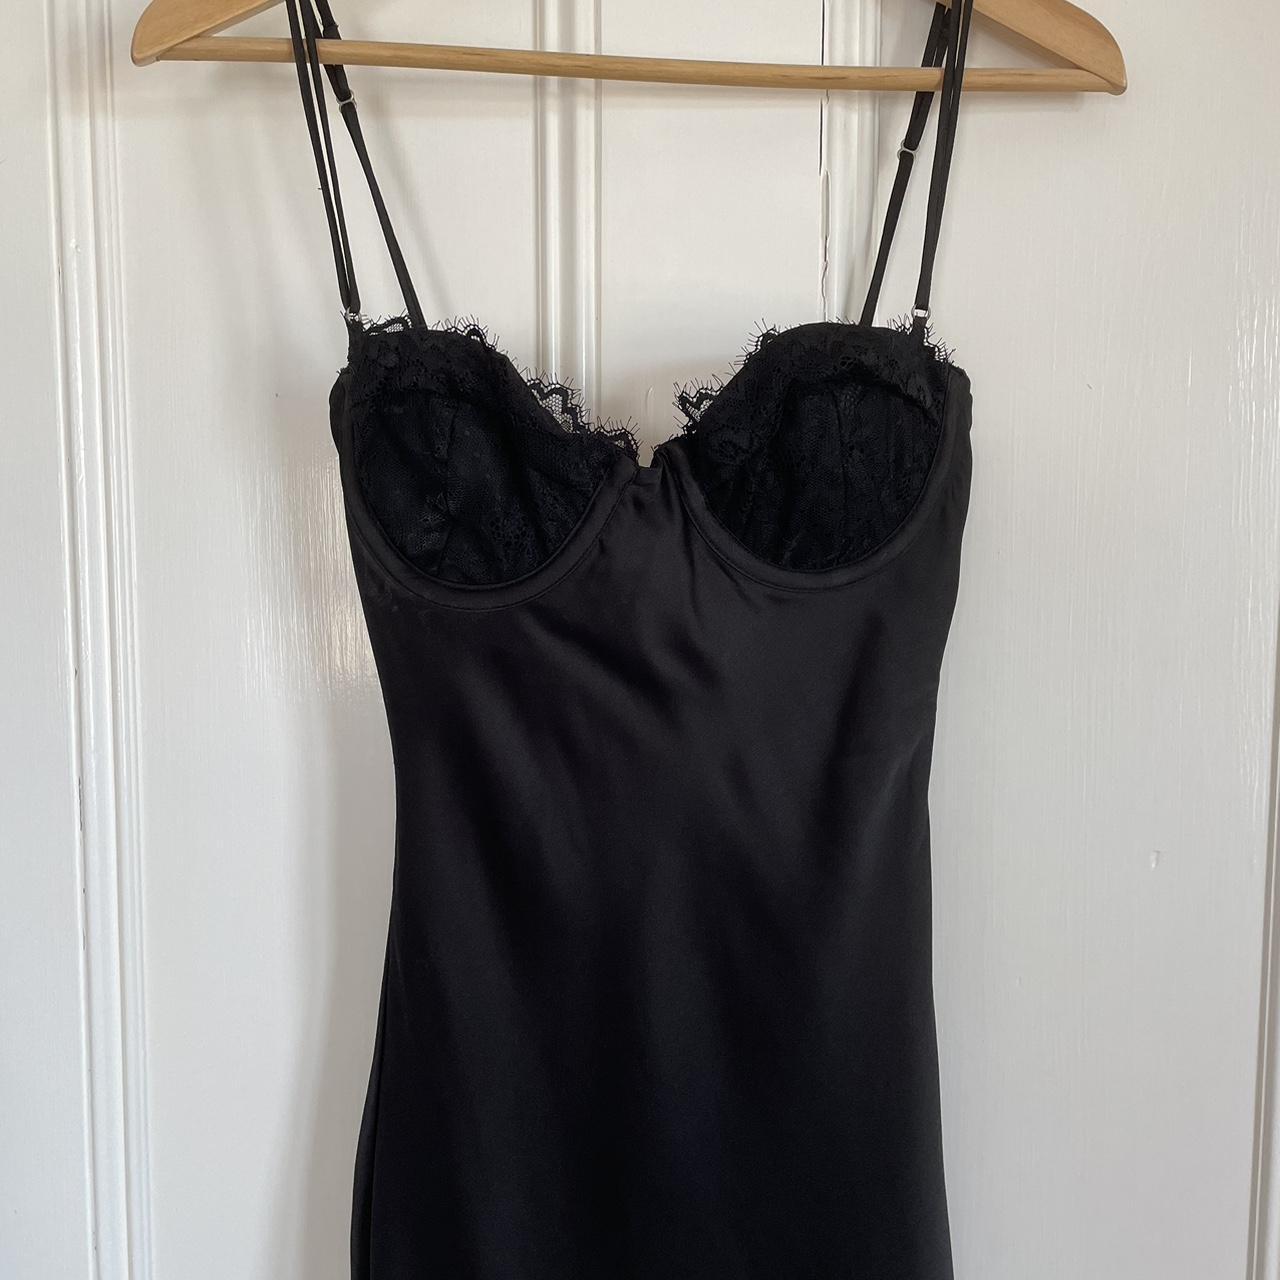 Mistress rocks black satin lace dress Size XS (fits... - Depop